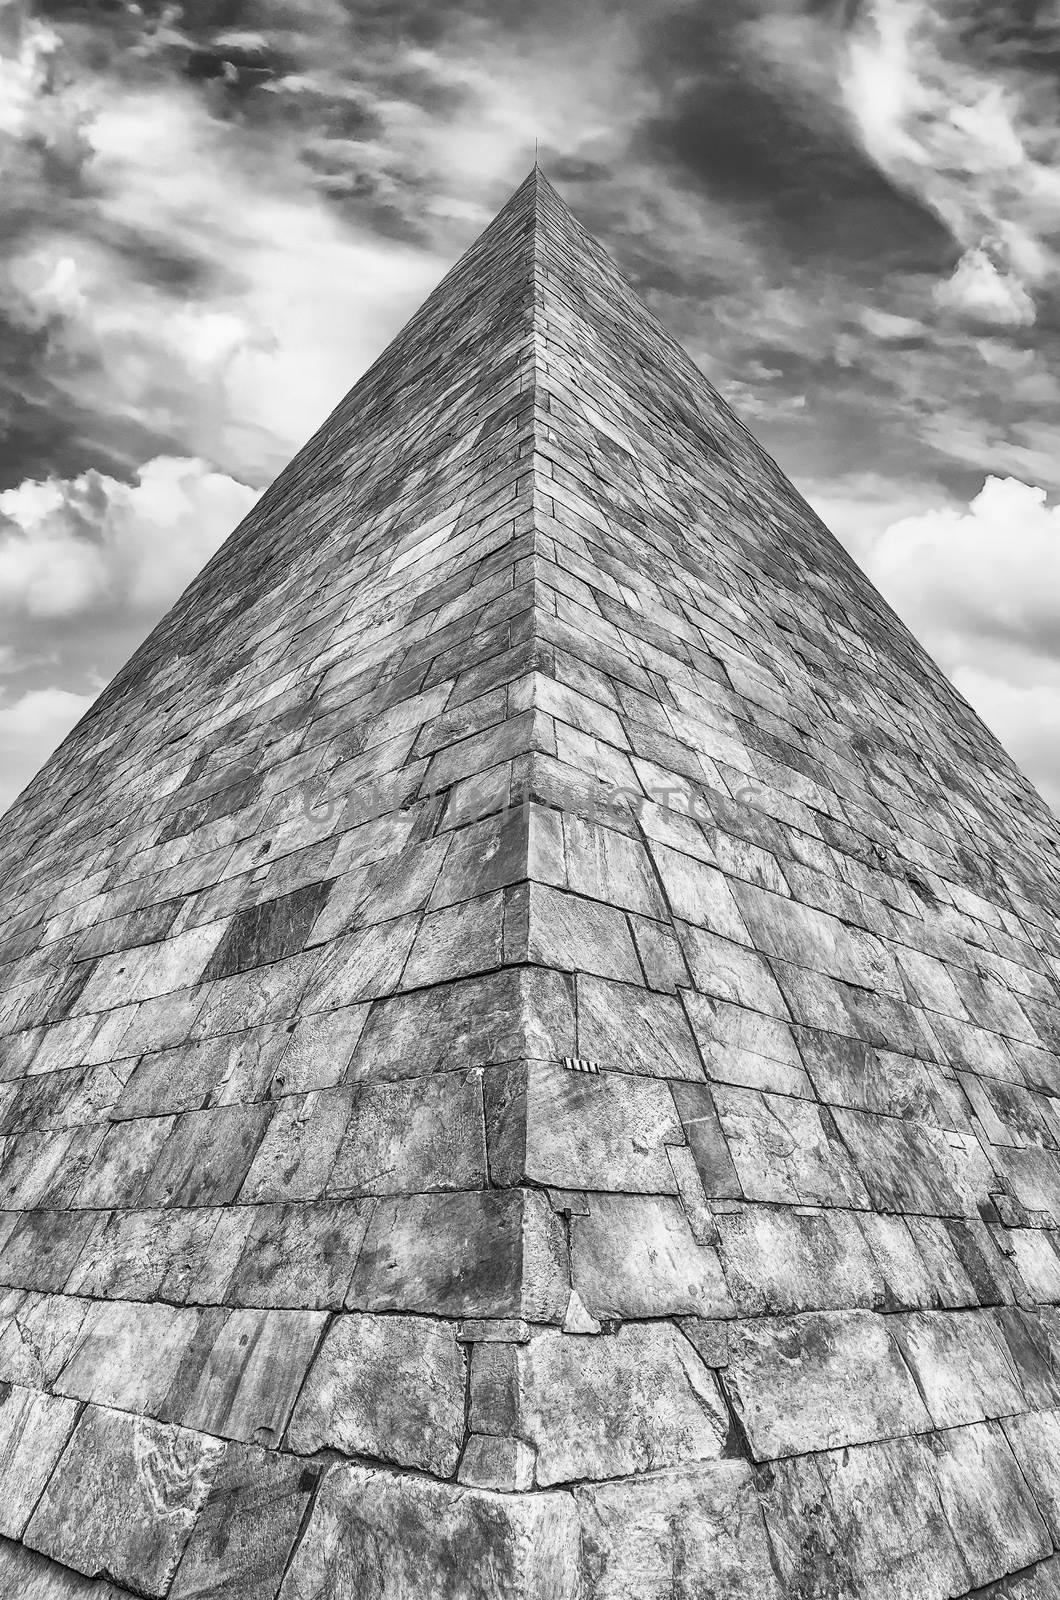 Scenic view of the Pyramid of Cestius, iconic landmark in Testaccio district in Rome, Italy